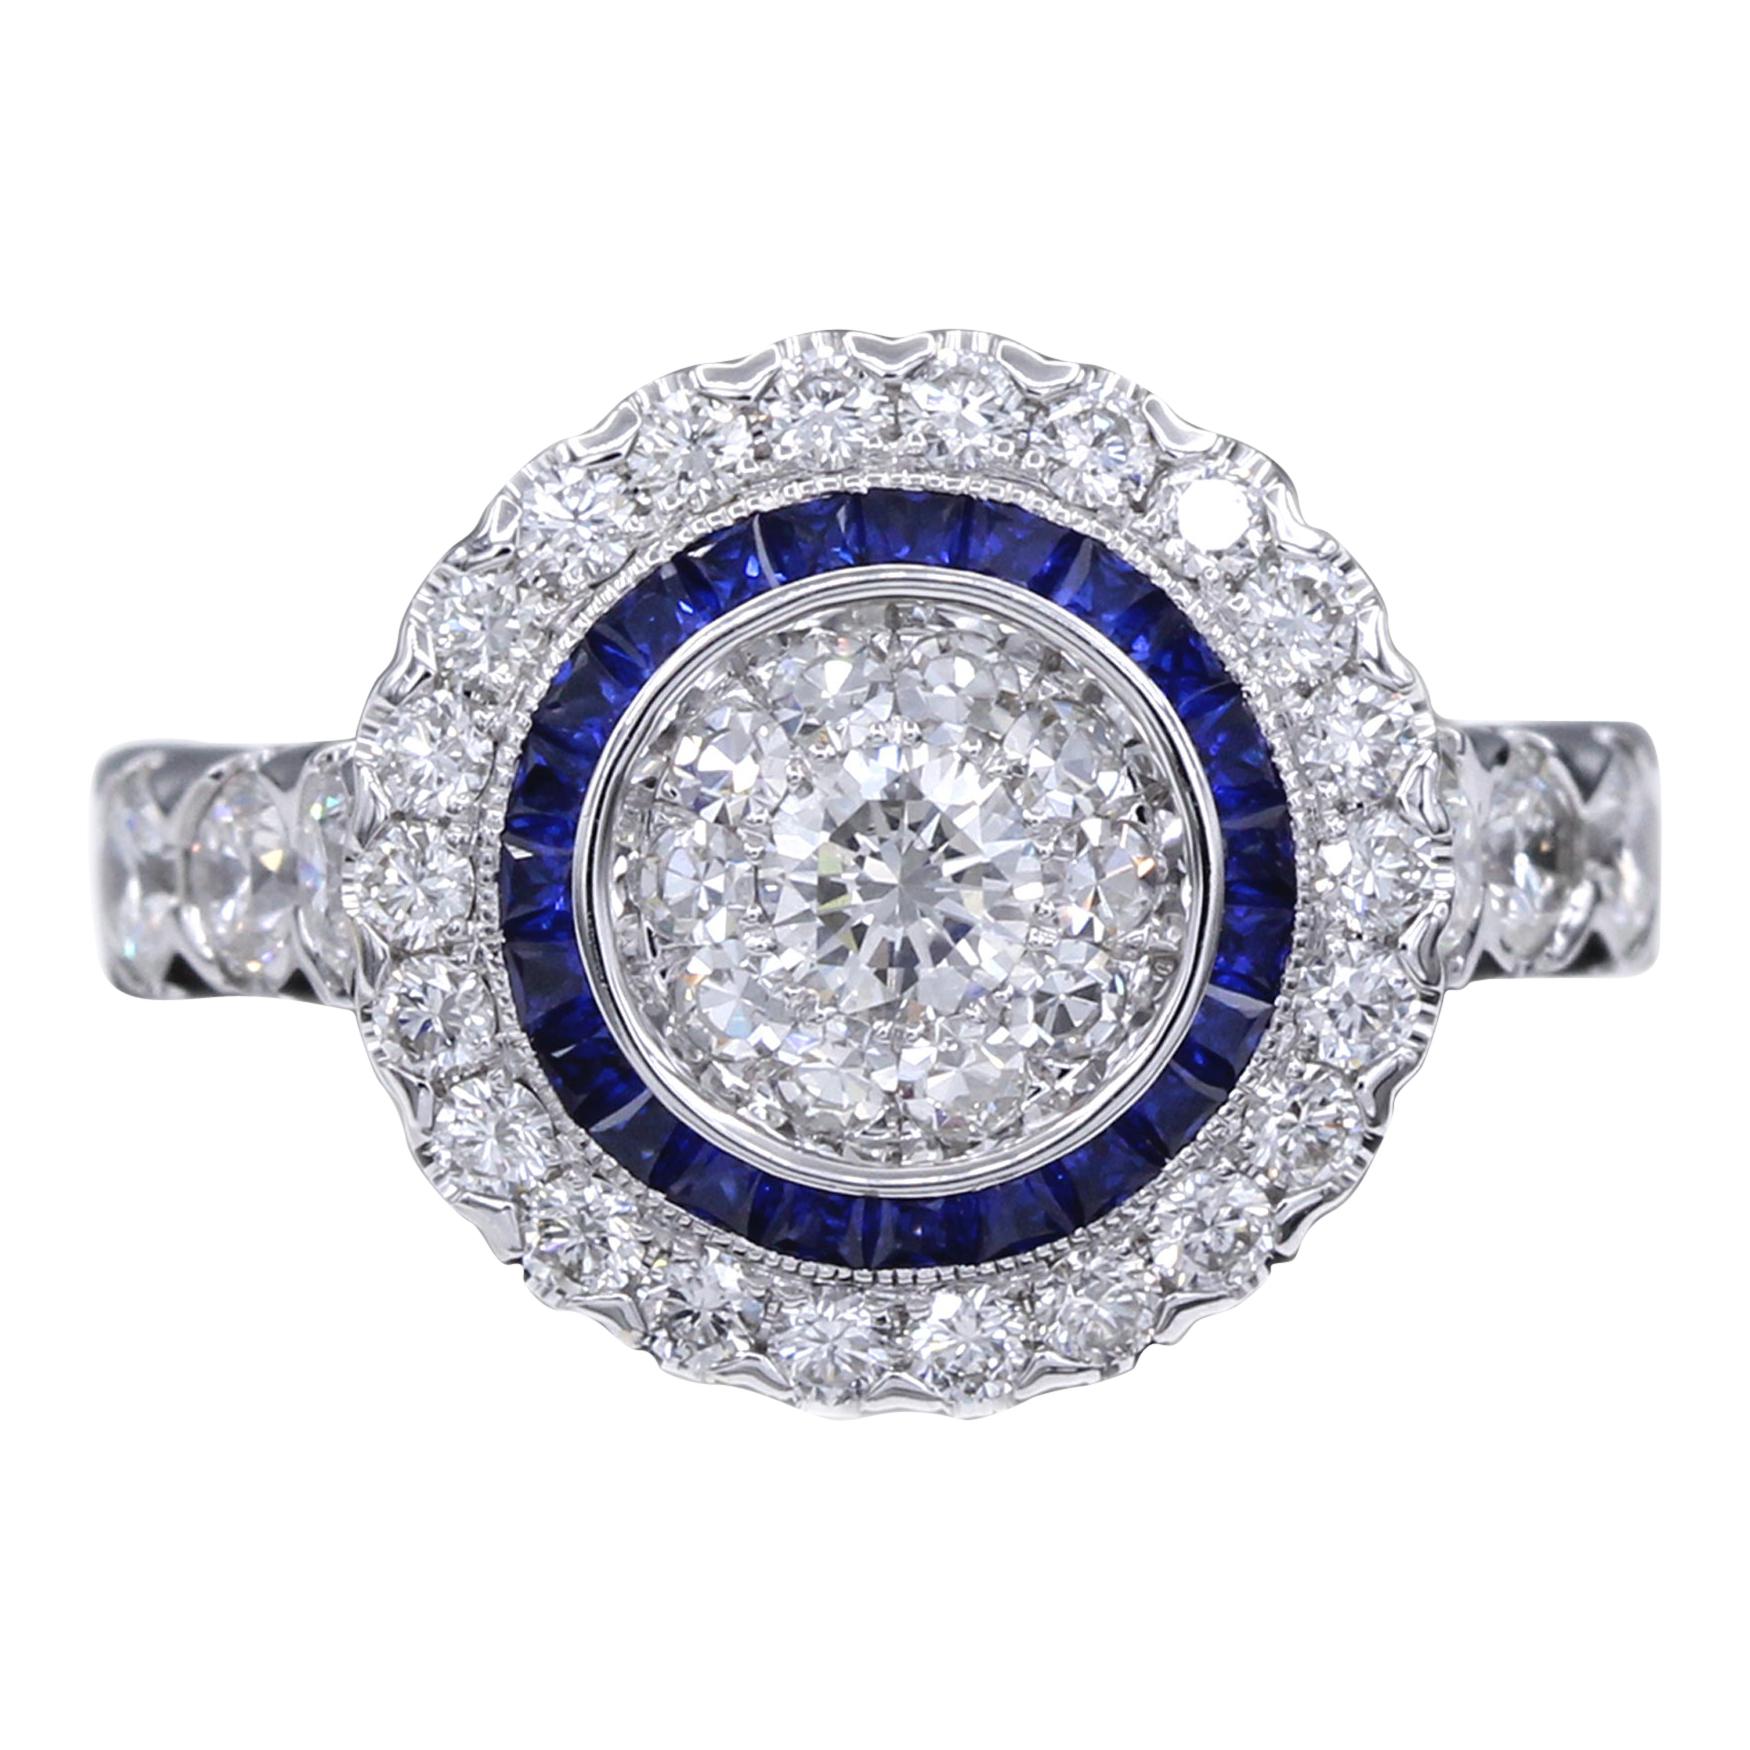 Art Deco Style Ring 18 Karat White Gold Diamonds and Blue Saphhire Art Deco Ring